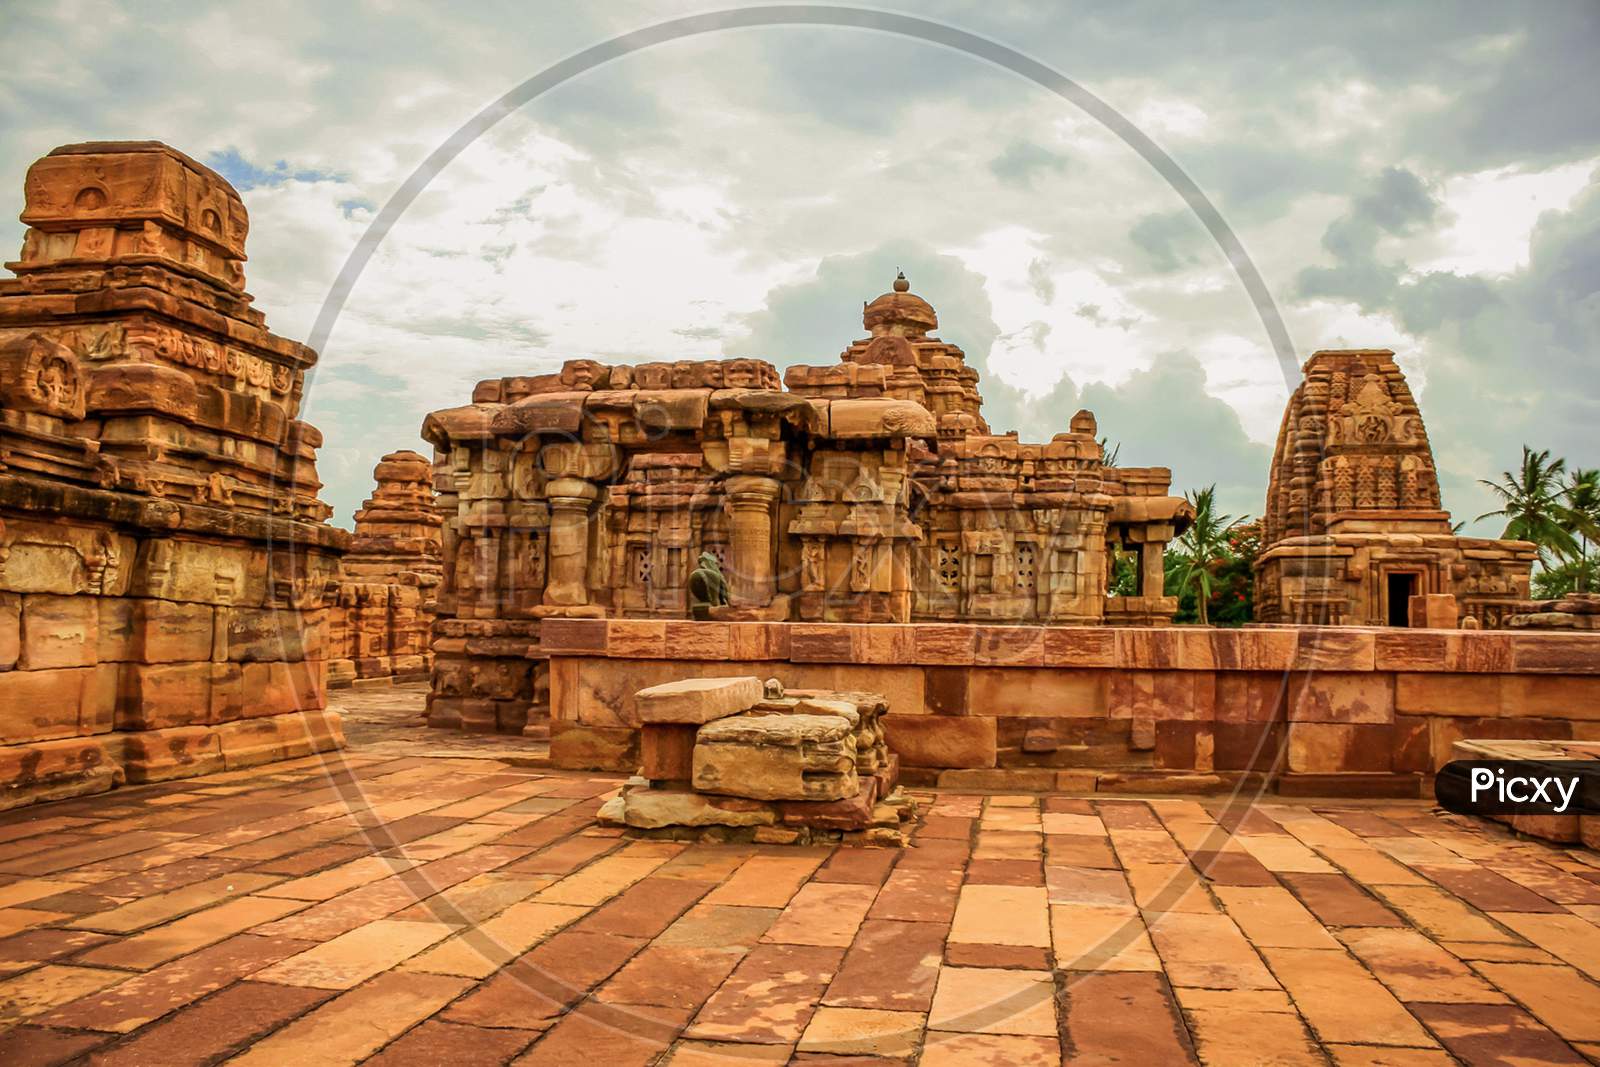 Group of temples at Pattadakallu